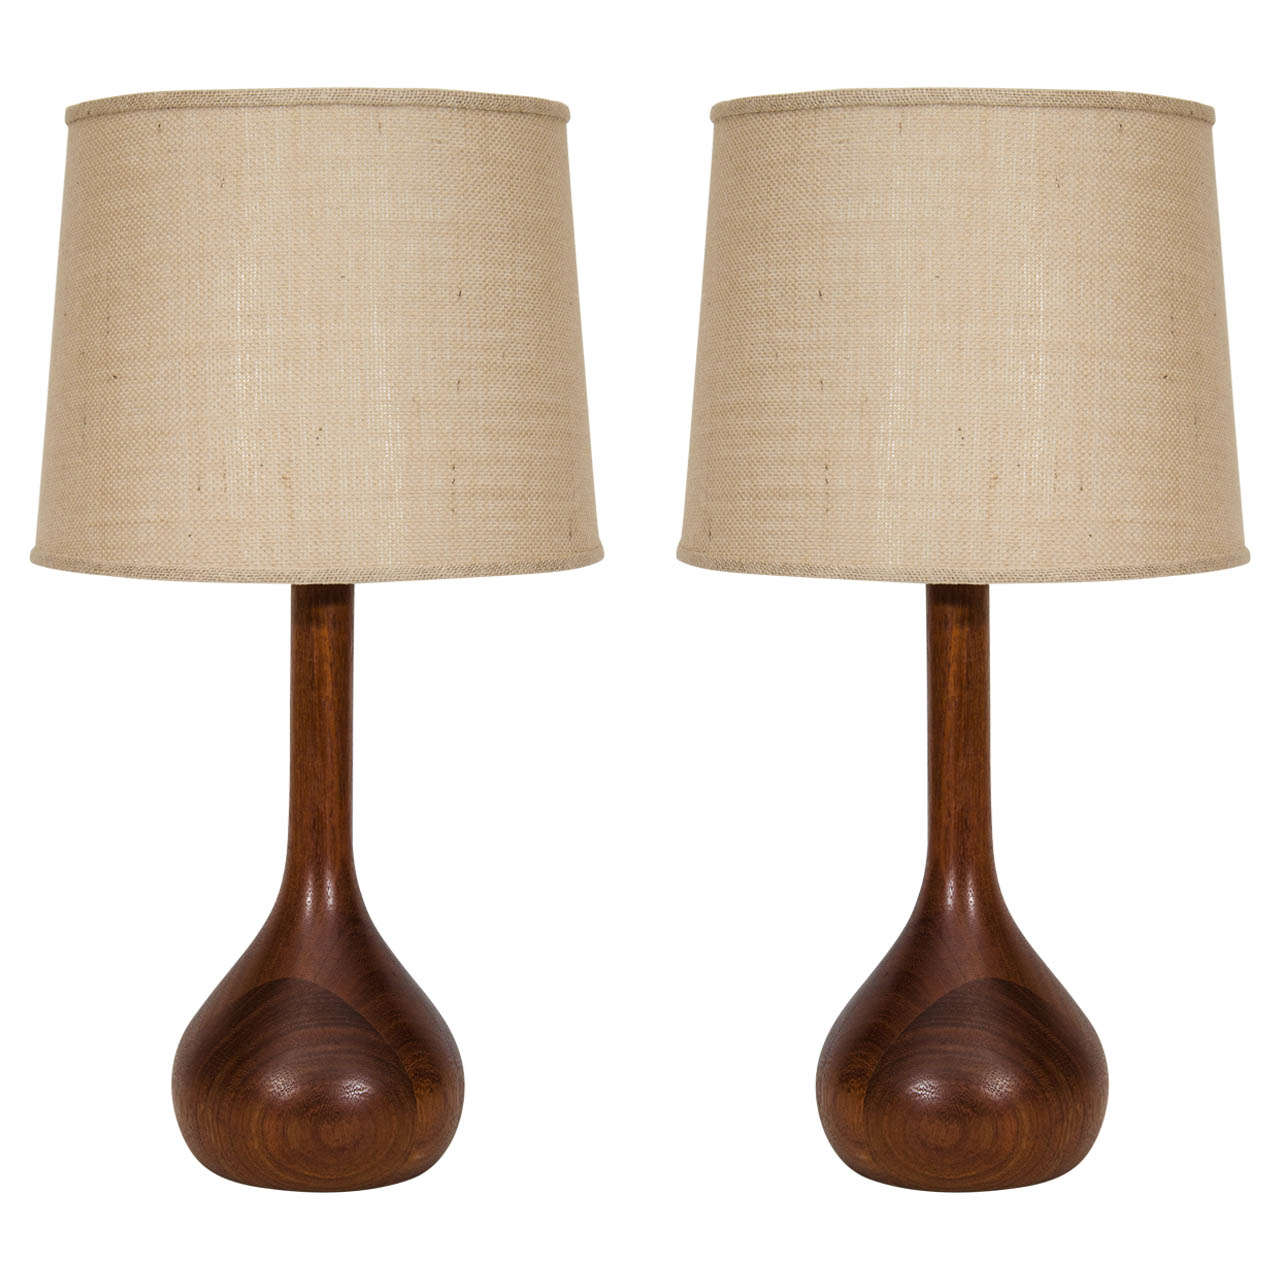 Pair of Sculptural Walnut Lamps